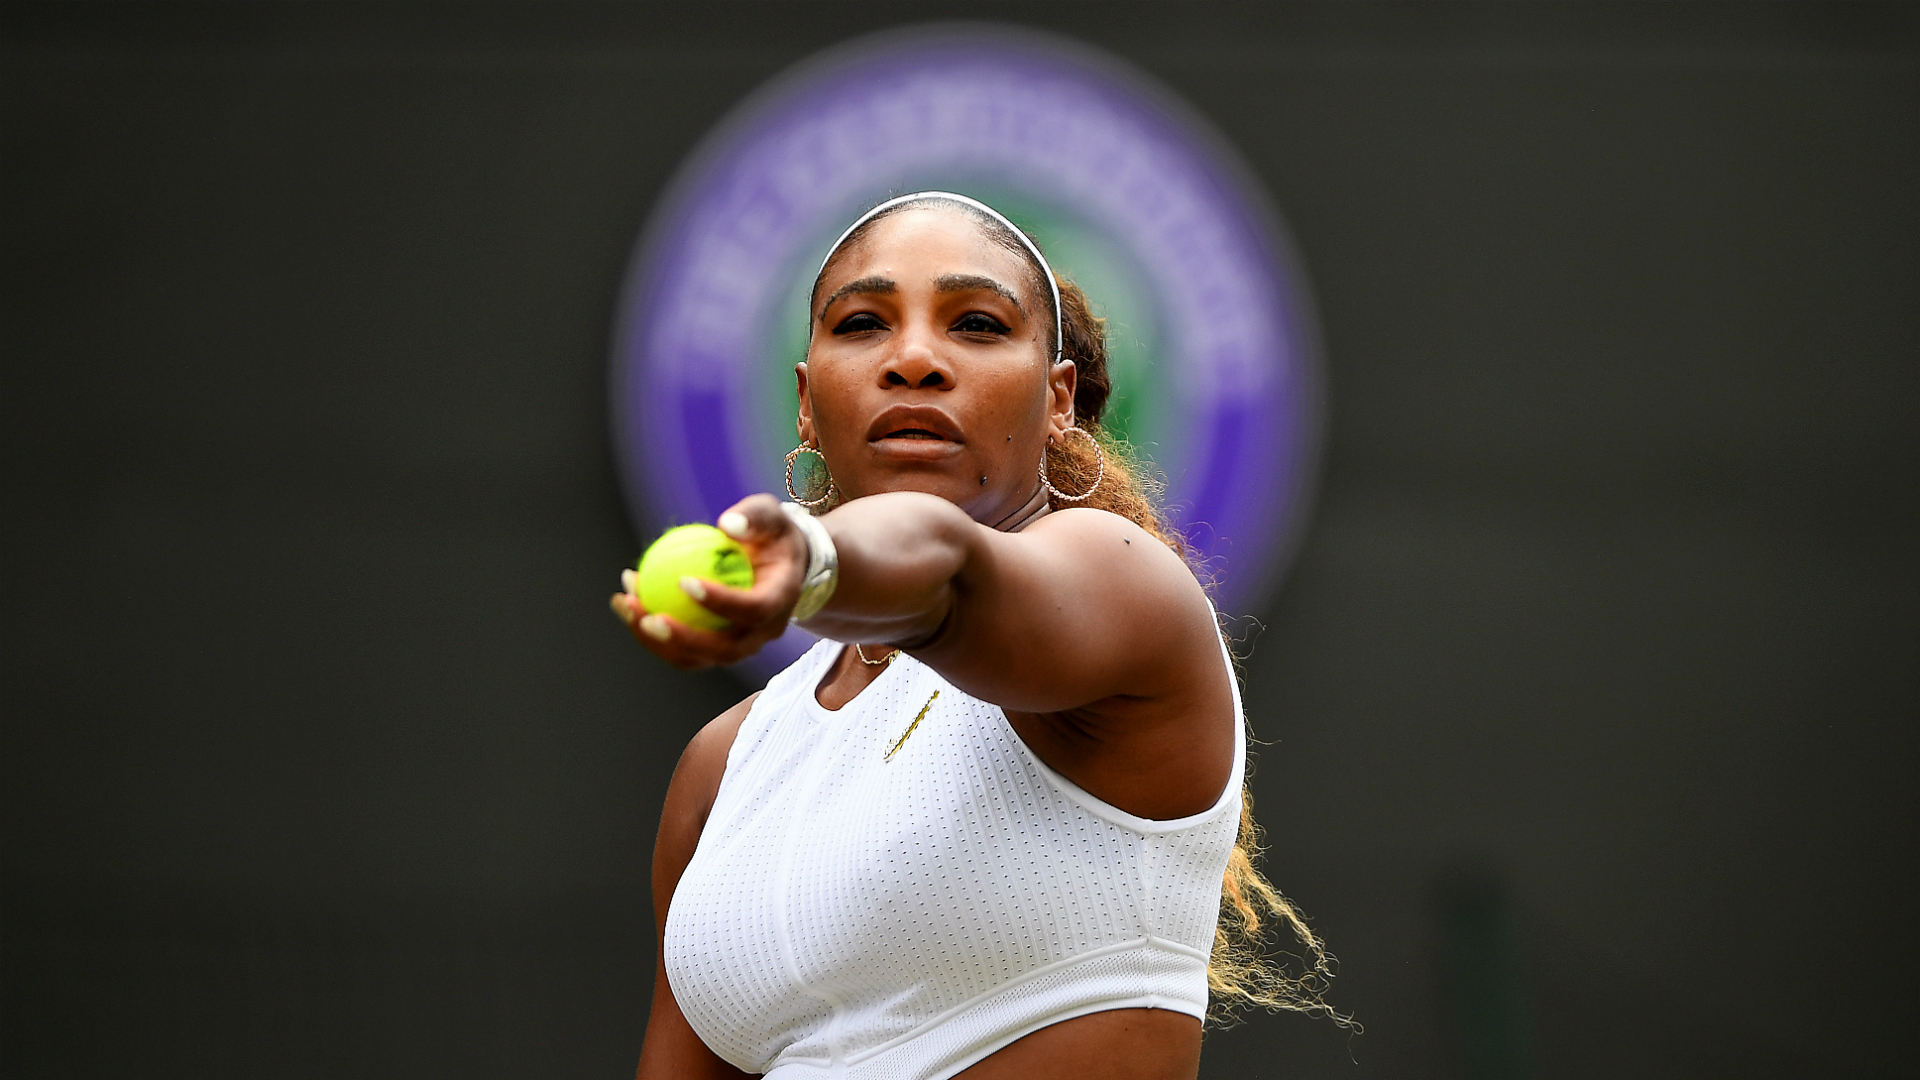 Wimbledon 2019: Super Serena Williams smashes Julia Goerges | Sporting News Australia1920 x 1080